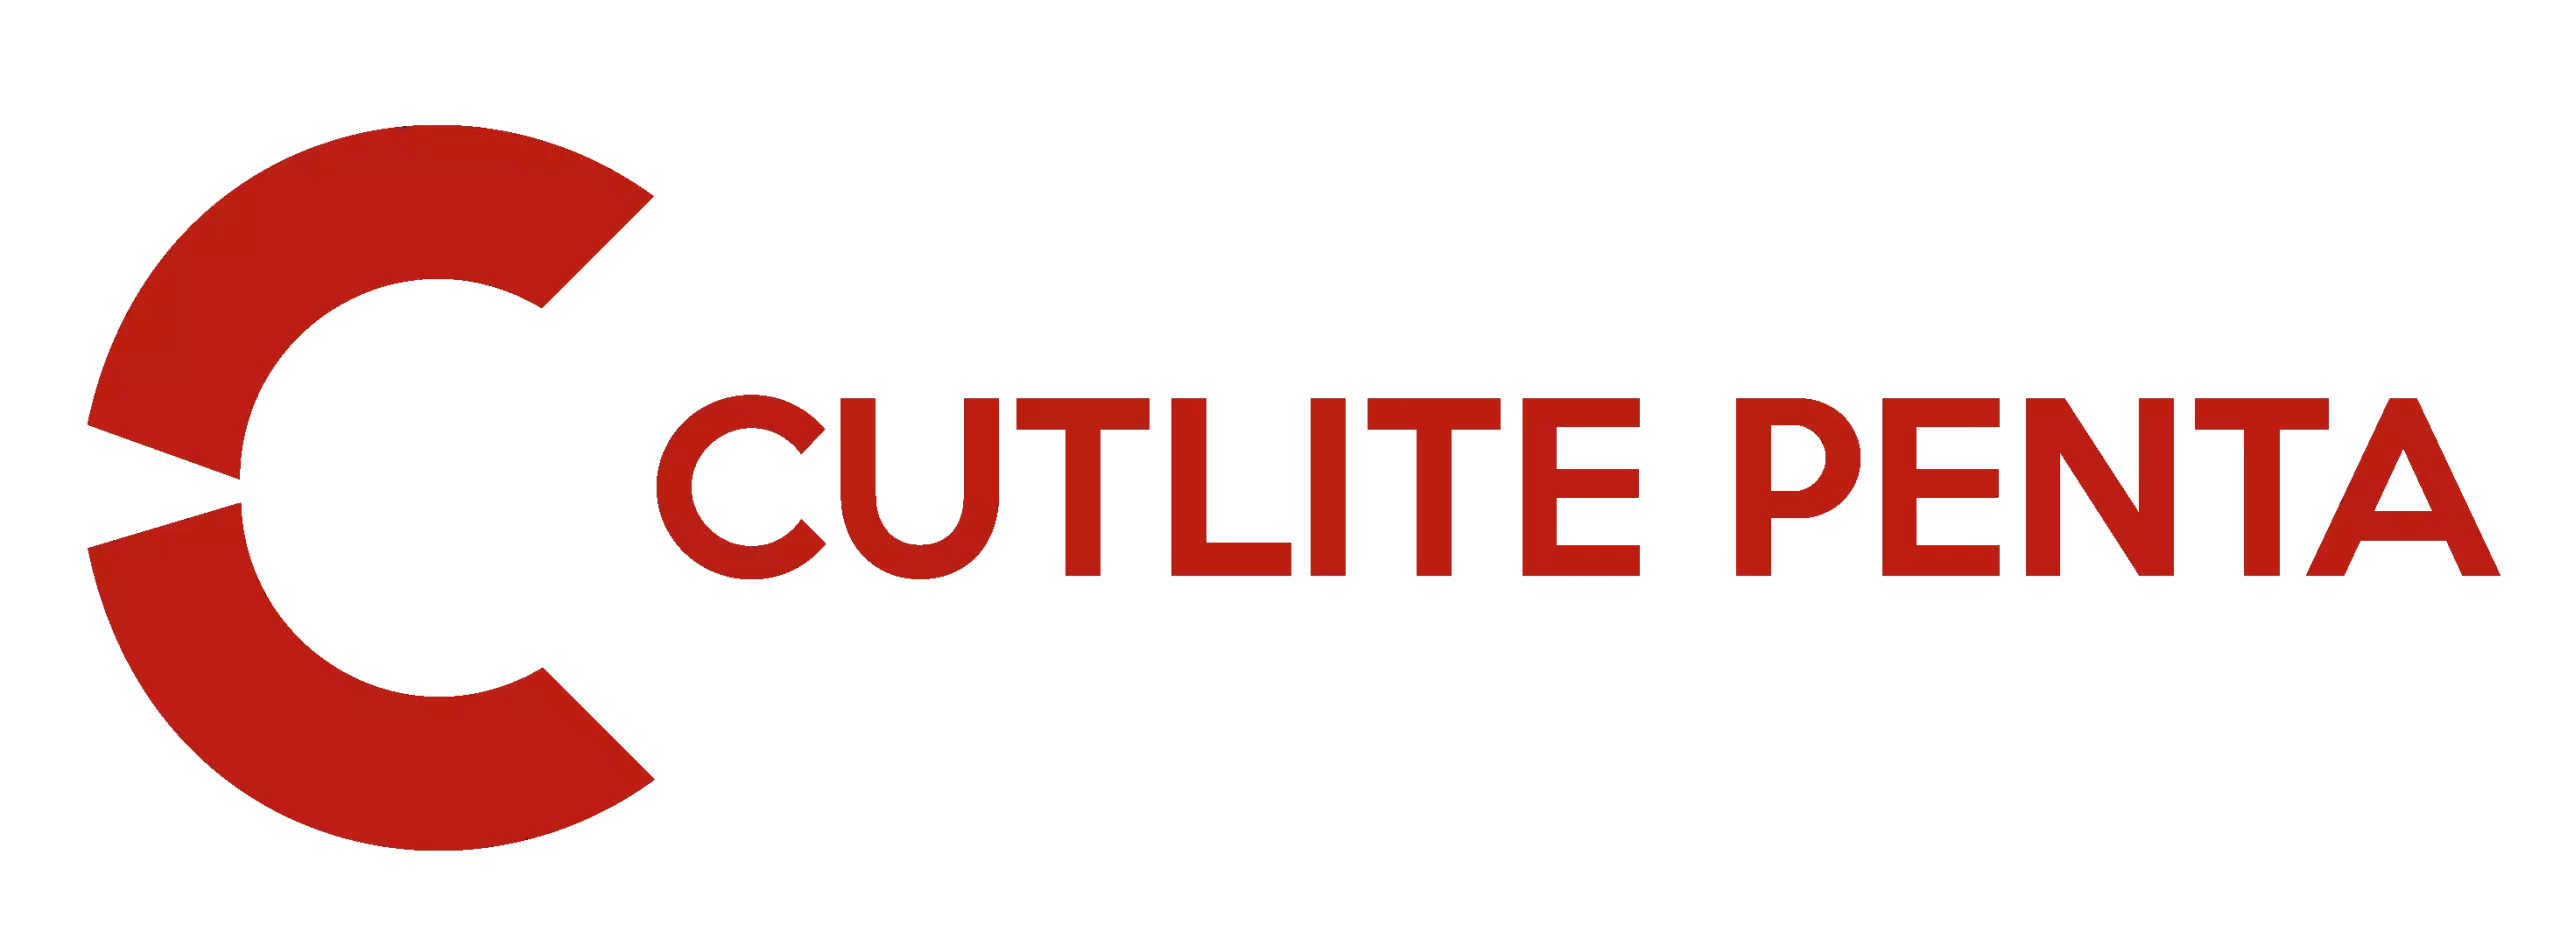 Cutlite penta logo